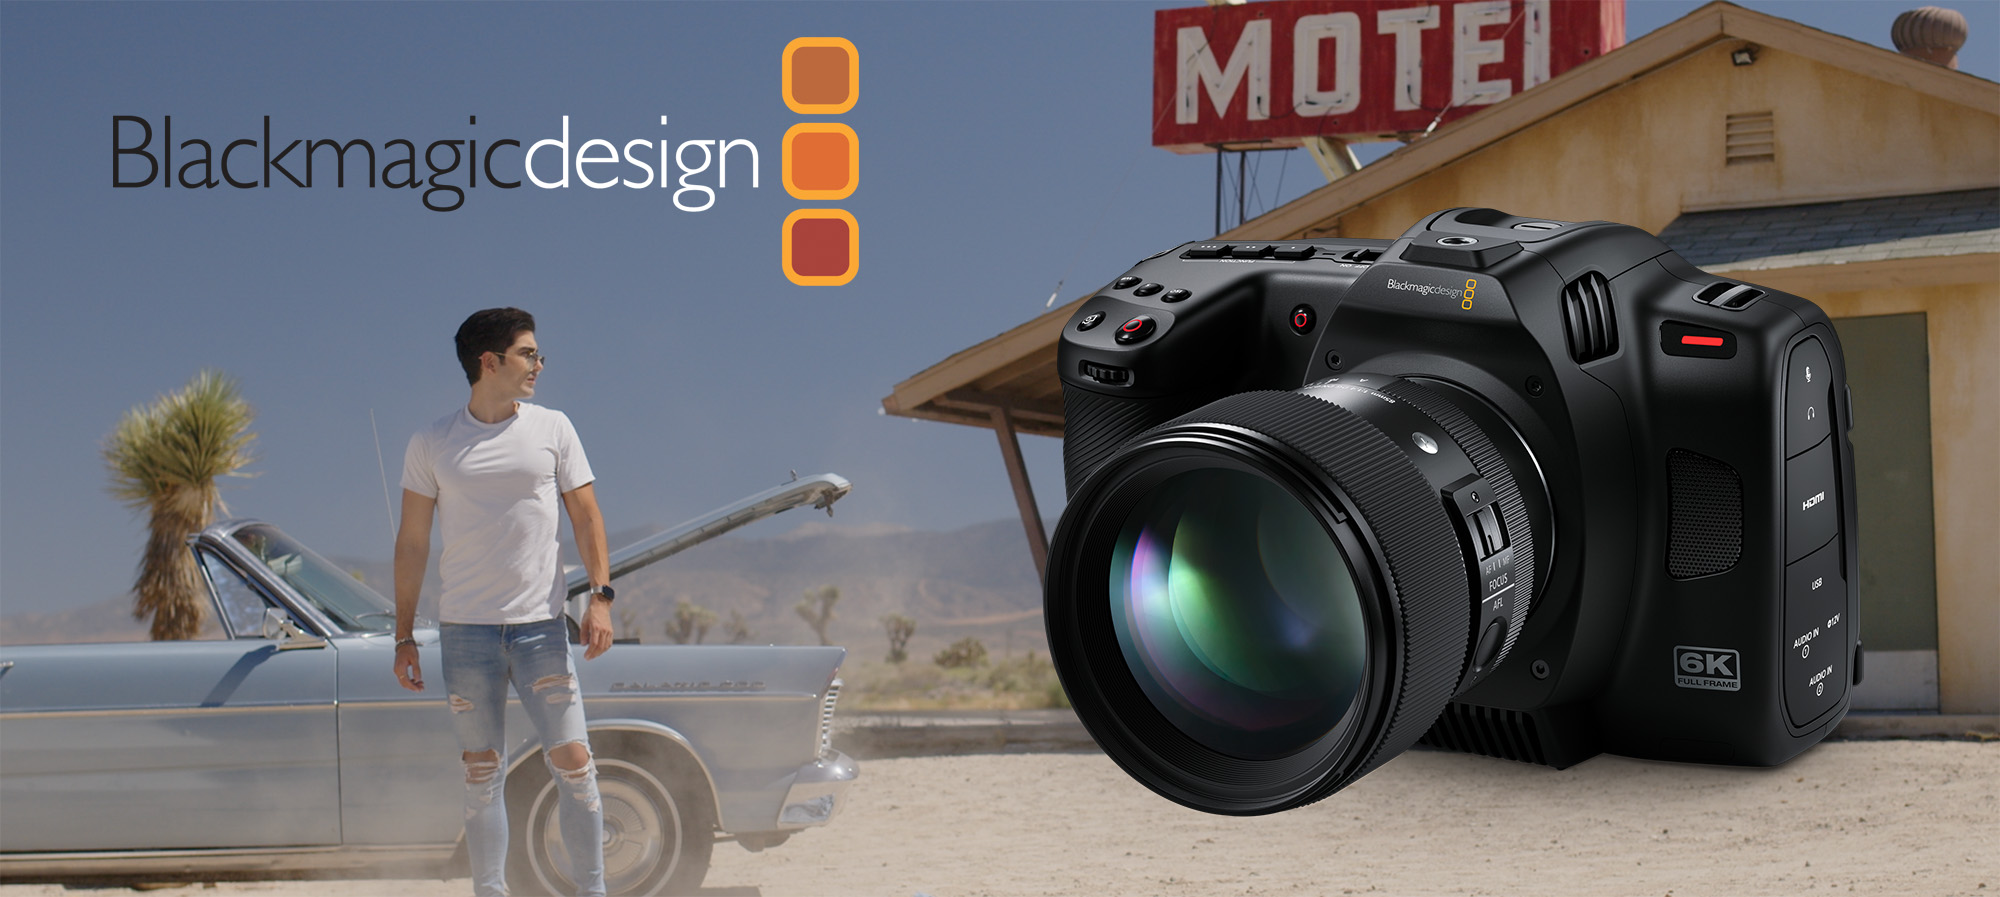 Review: Blackmagic Cinema Camera 6K - Blackmagic Design Expands Its Cinema Camera Lineup 12